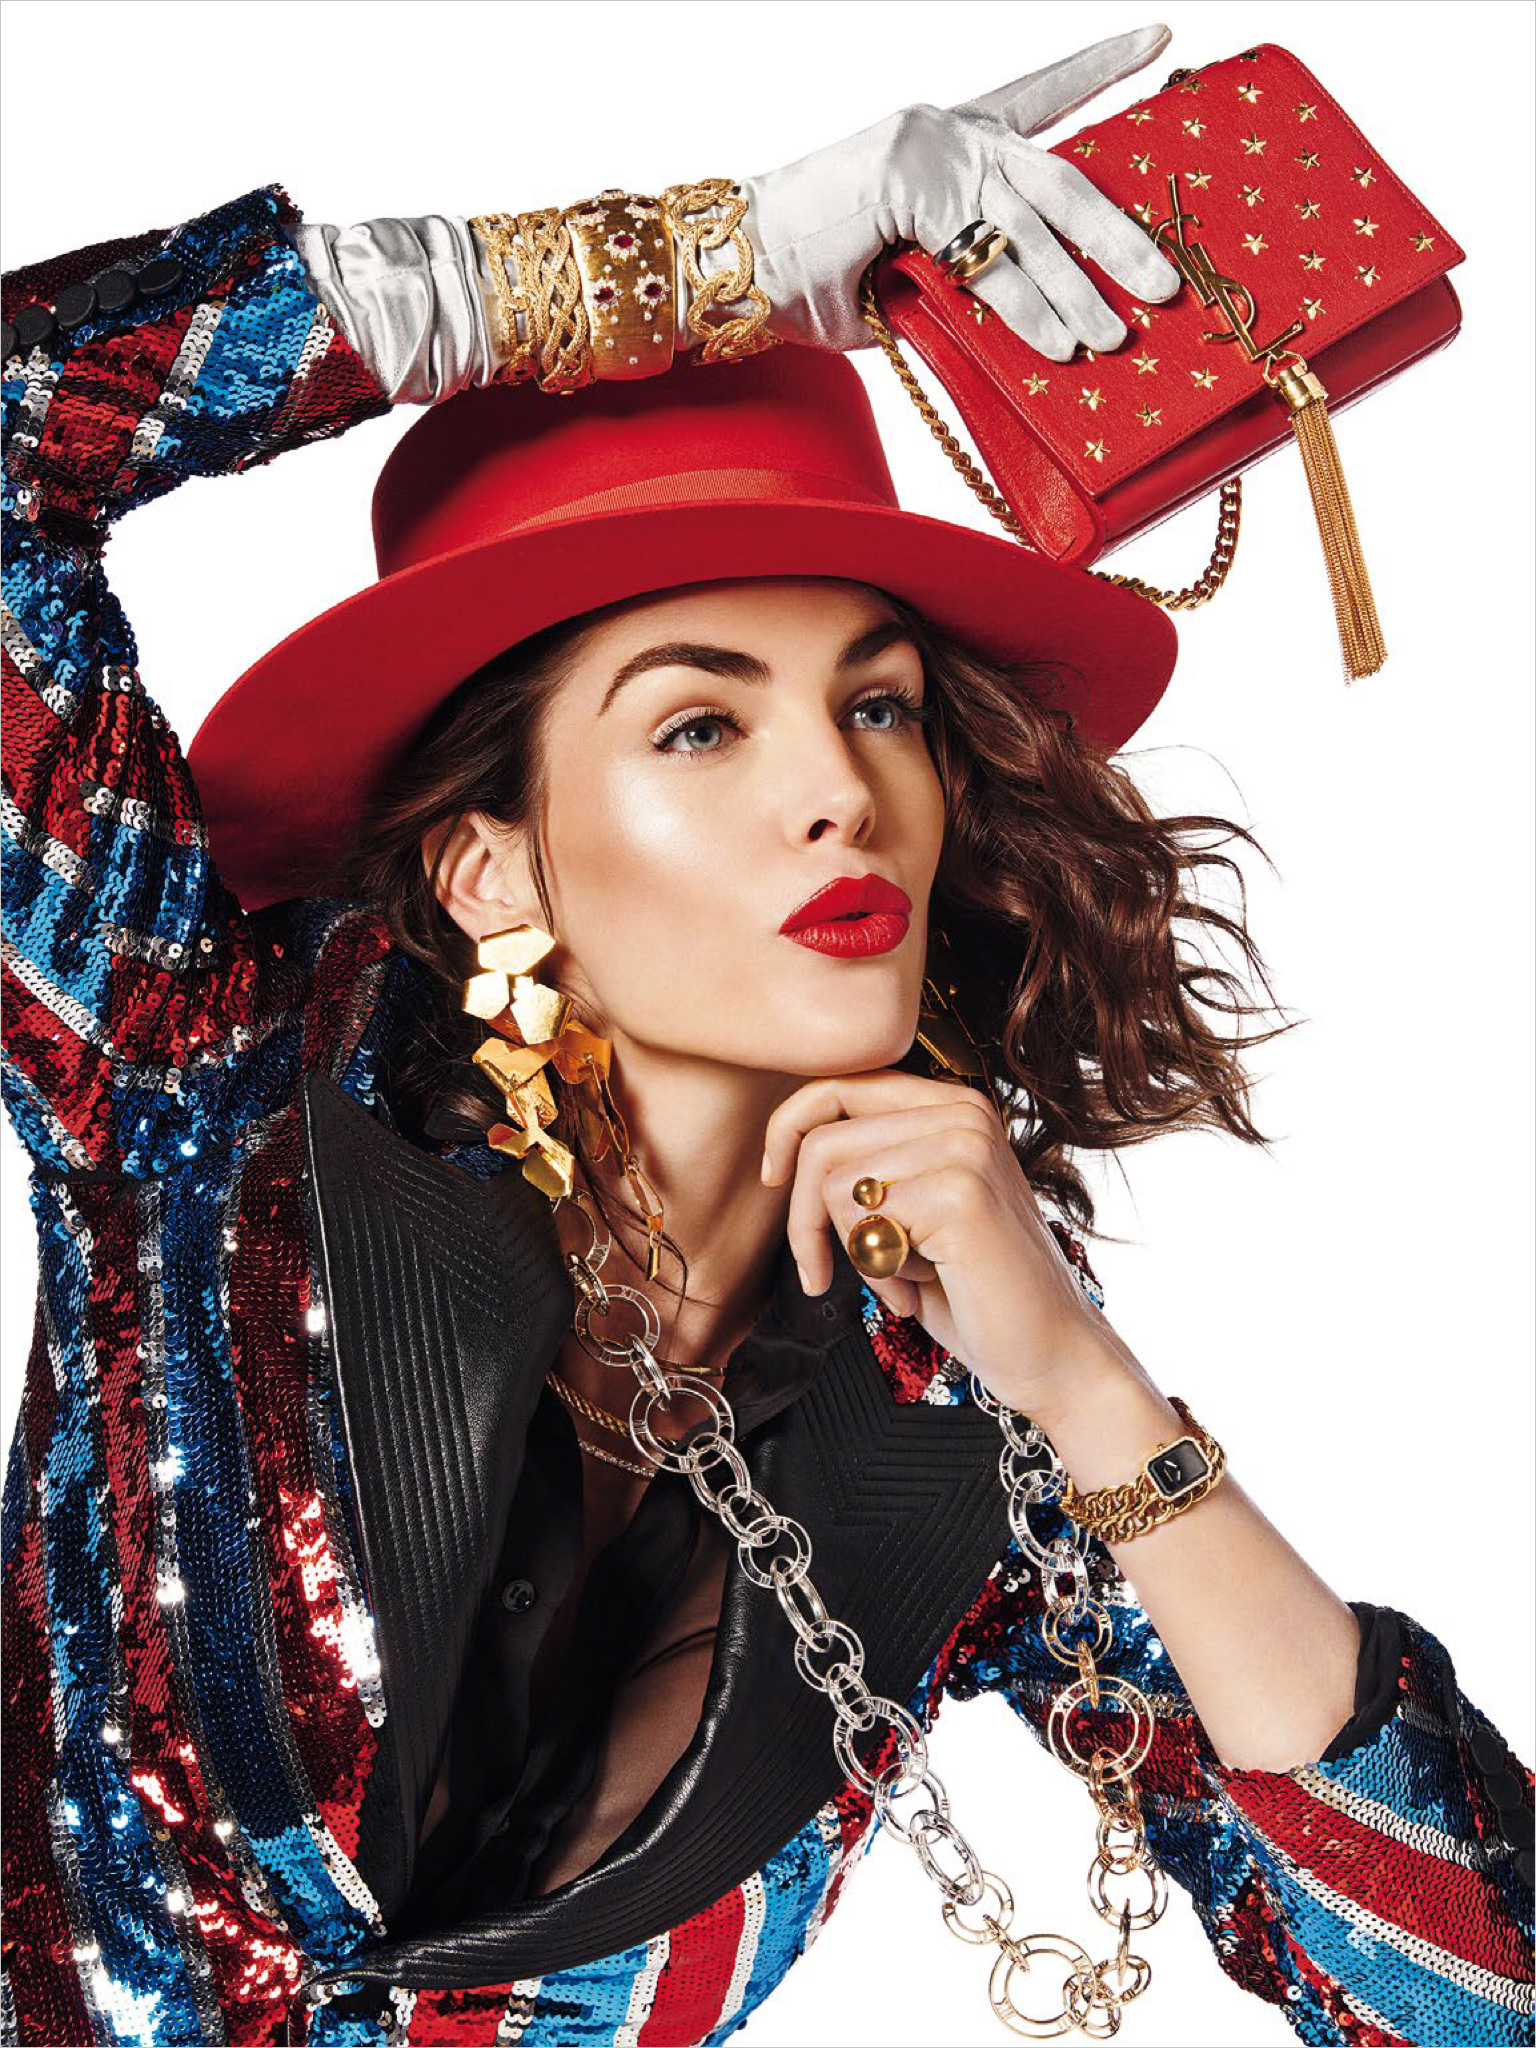 Hilary Rhoda | French Vogue February 2015 | IMG Models